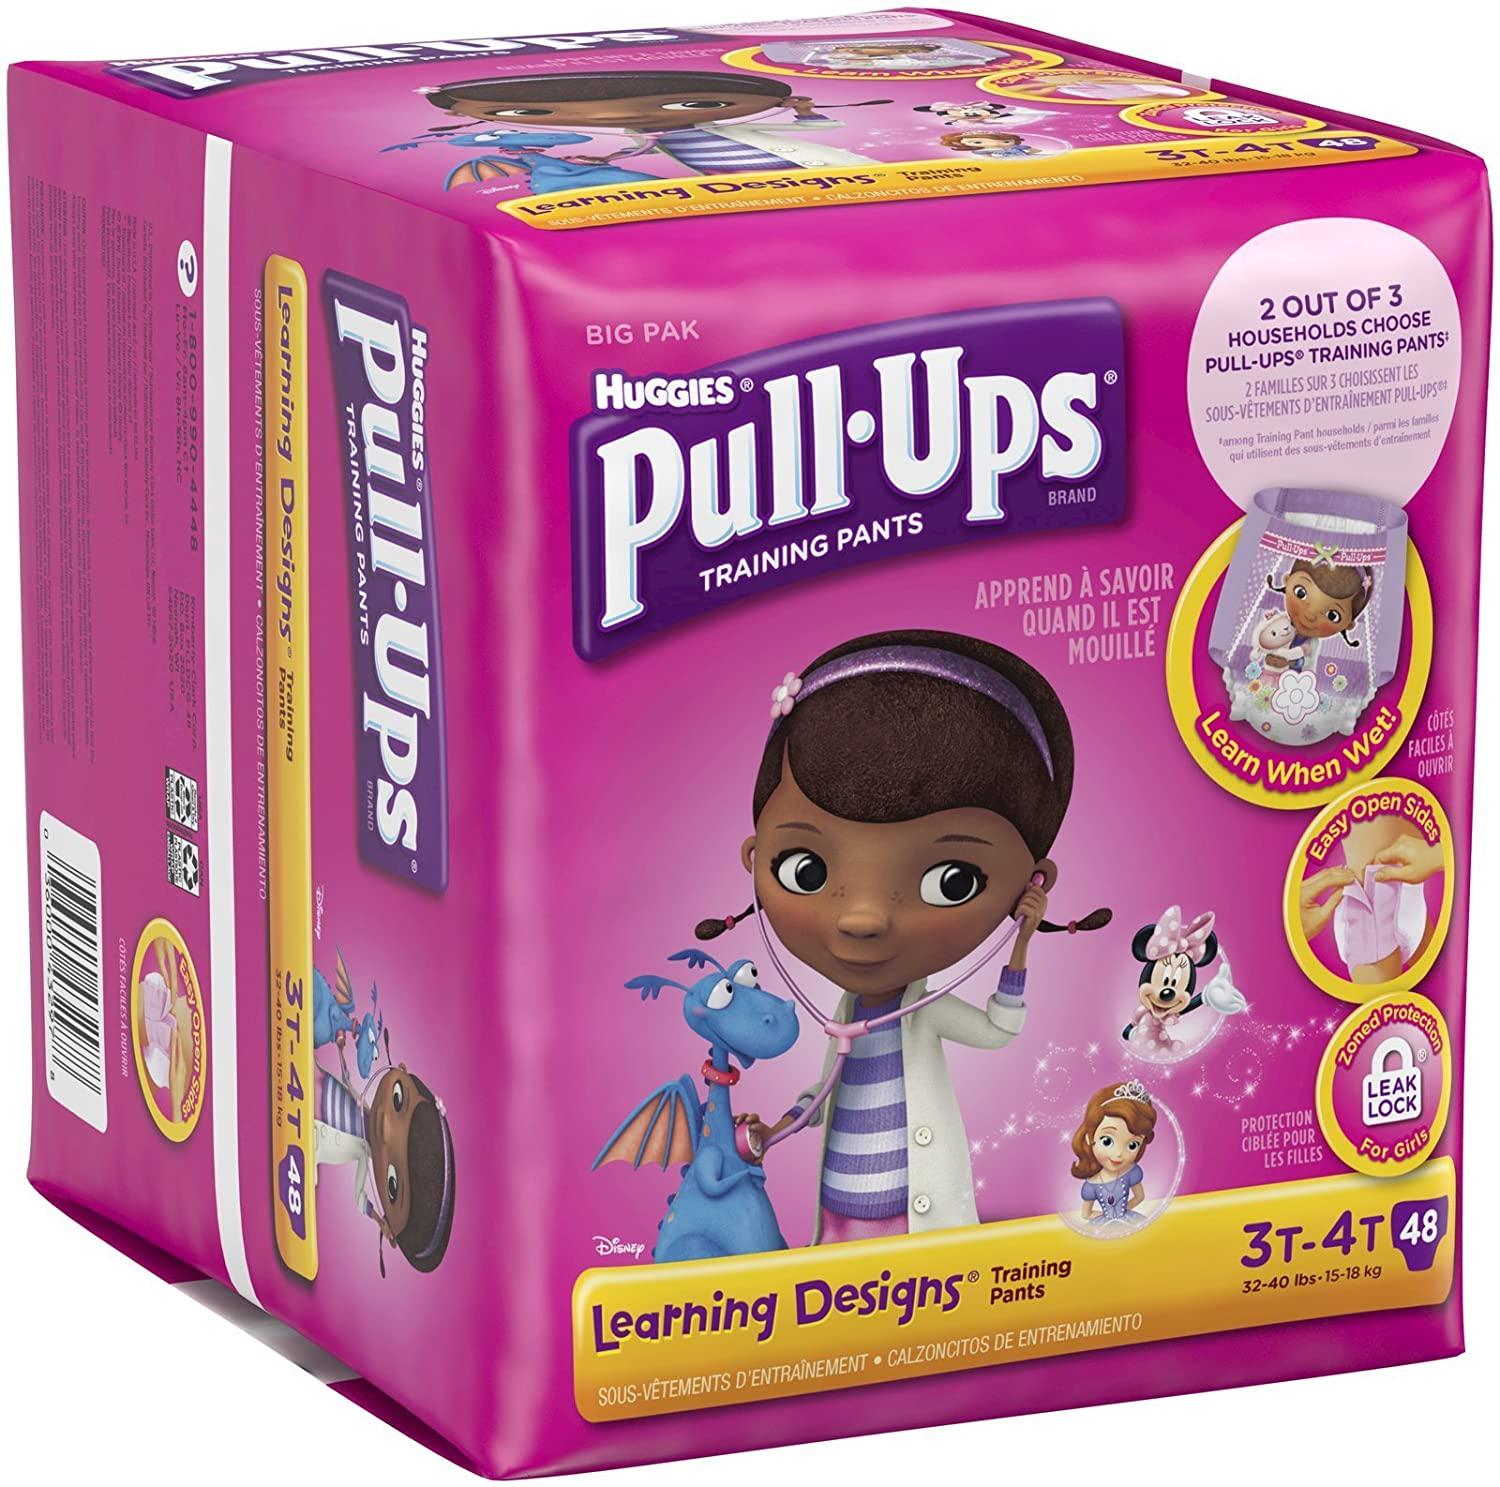 Huggies Pull-Ups Training Pants Learning Designs, Girls, 3T-4T, 48